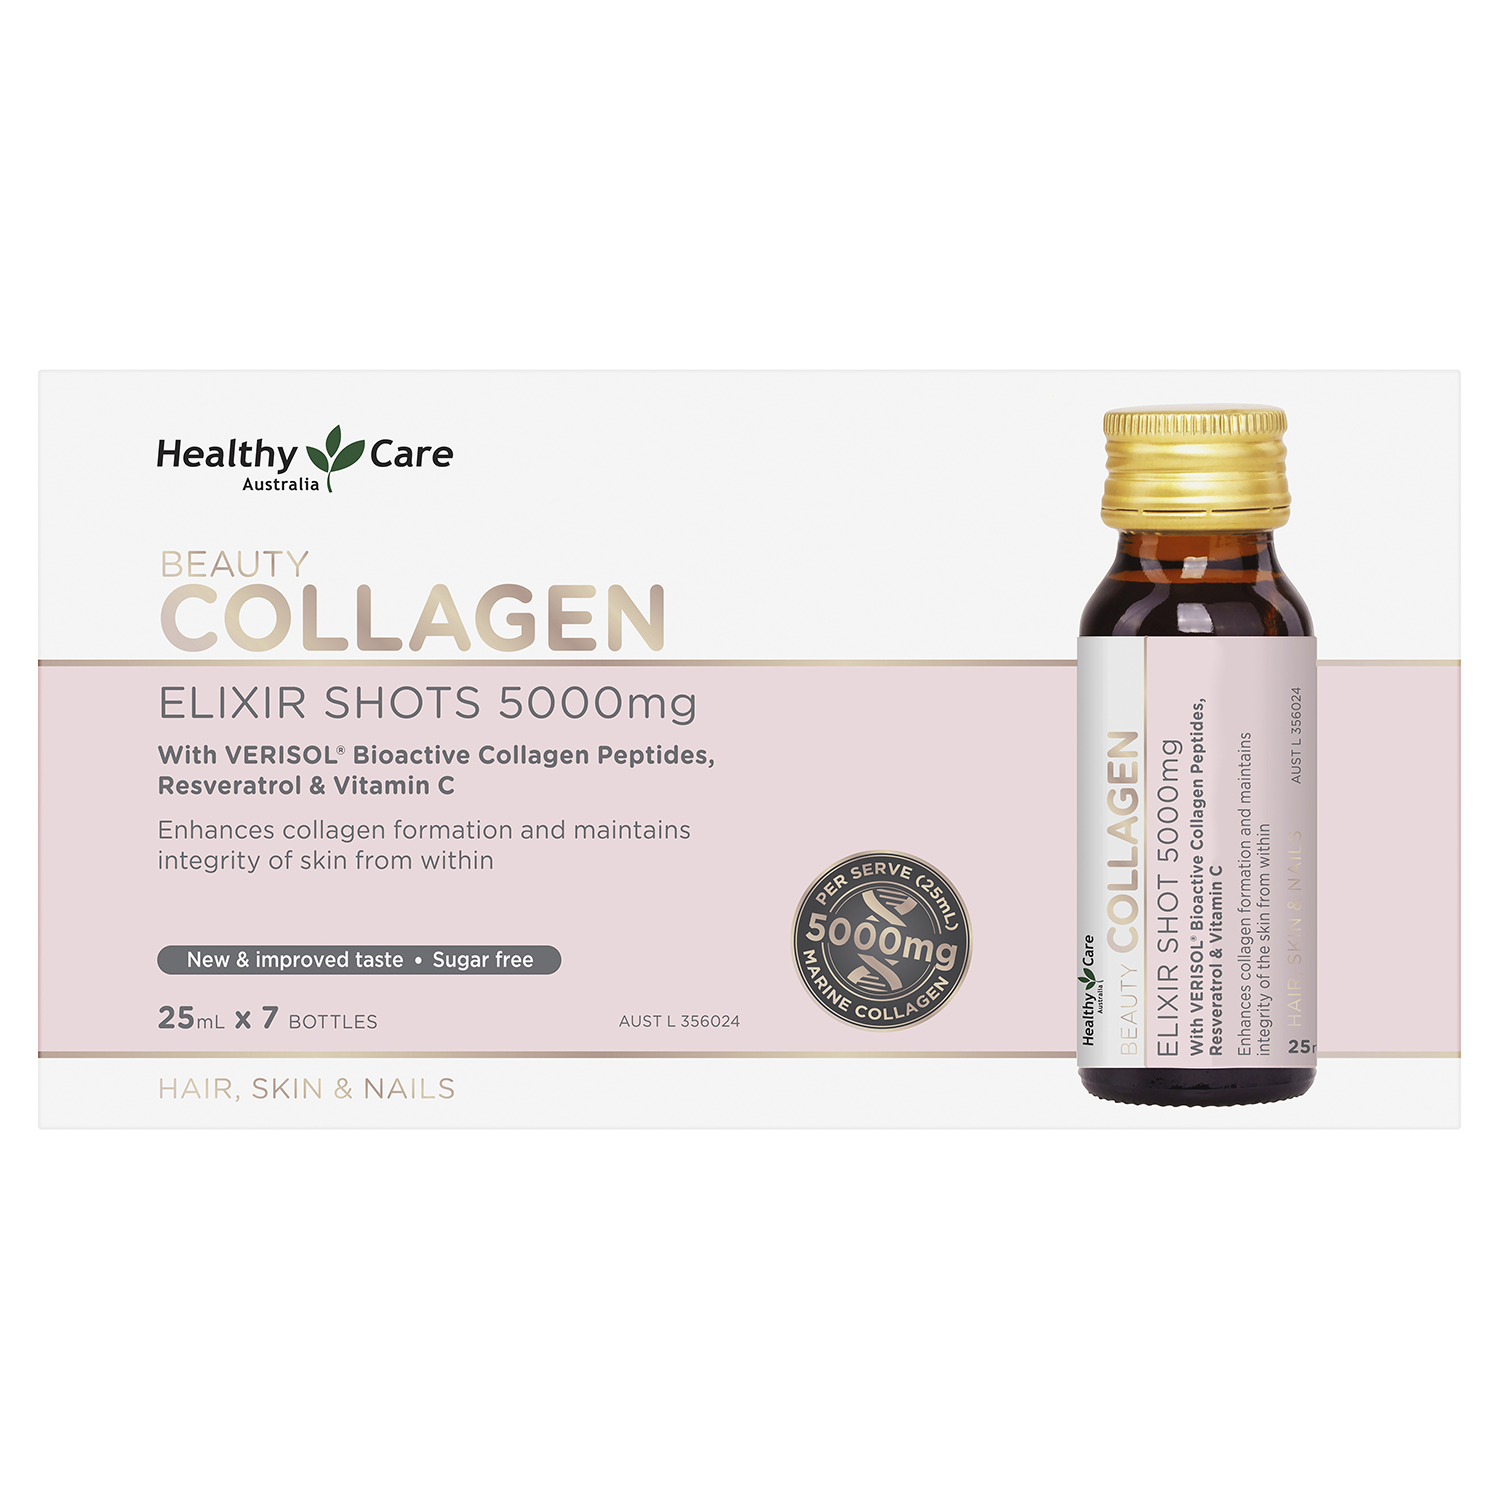 Healthy Care Beauty Collagen Elixir Shots 5,000mg 25mL x 7 bottles (Label)-Vitamins & Supplements